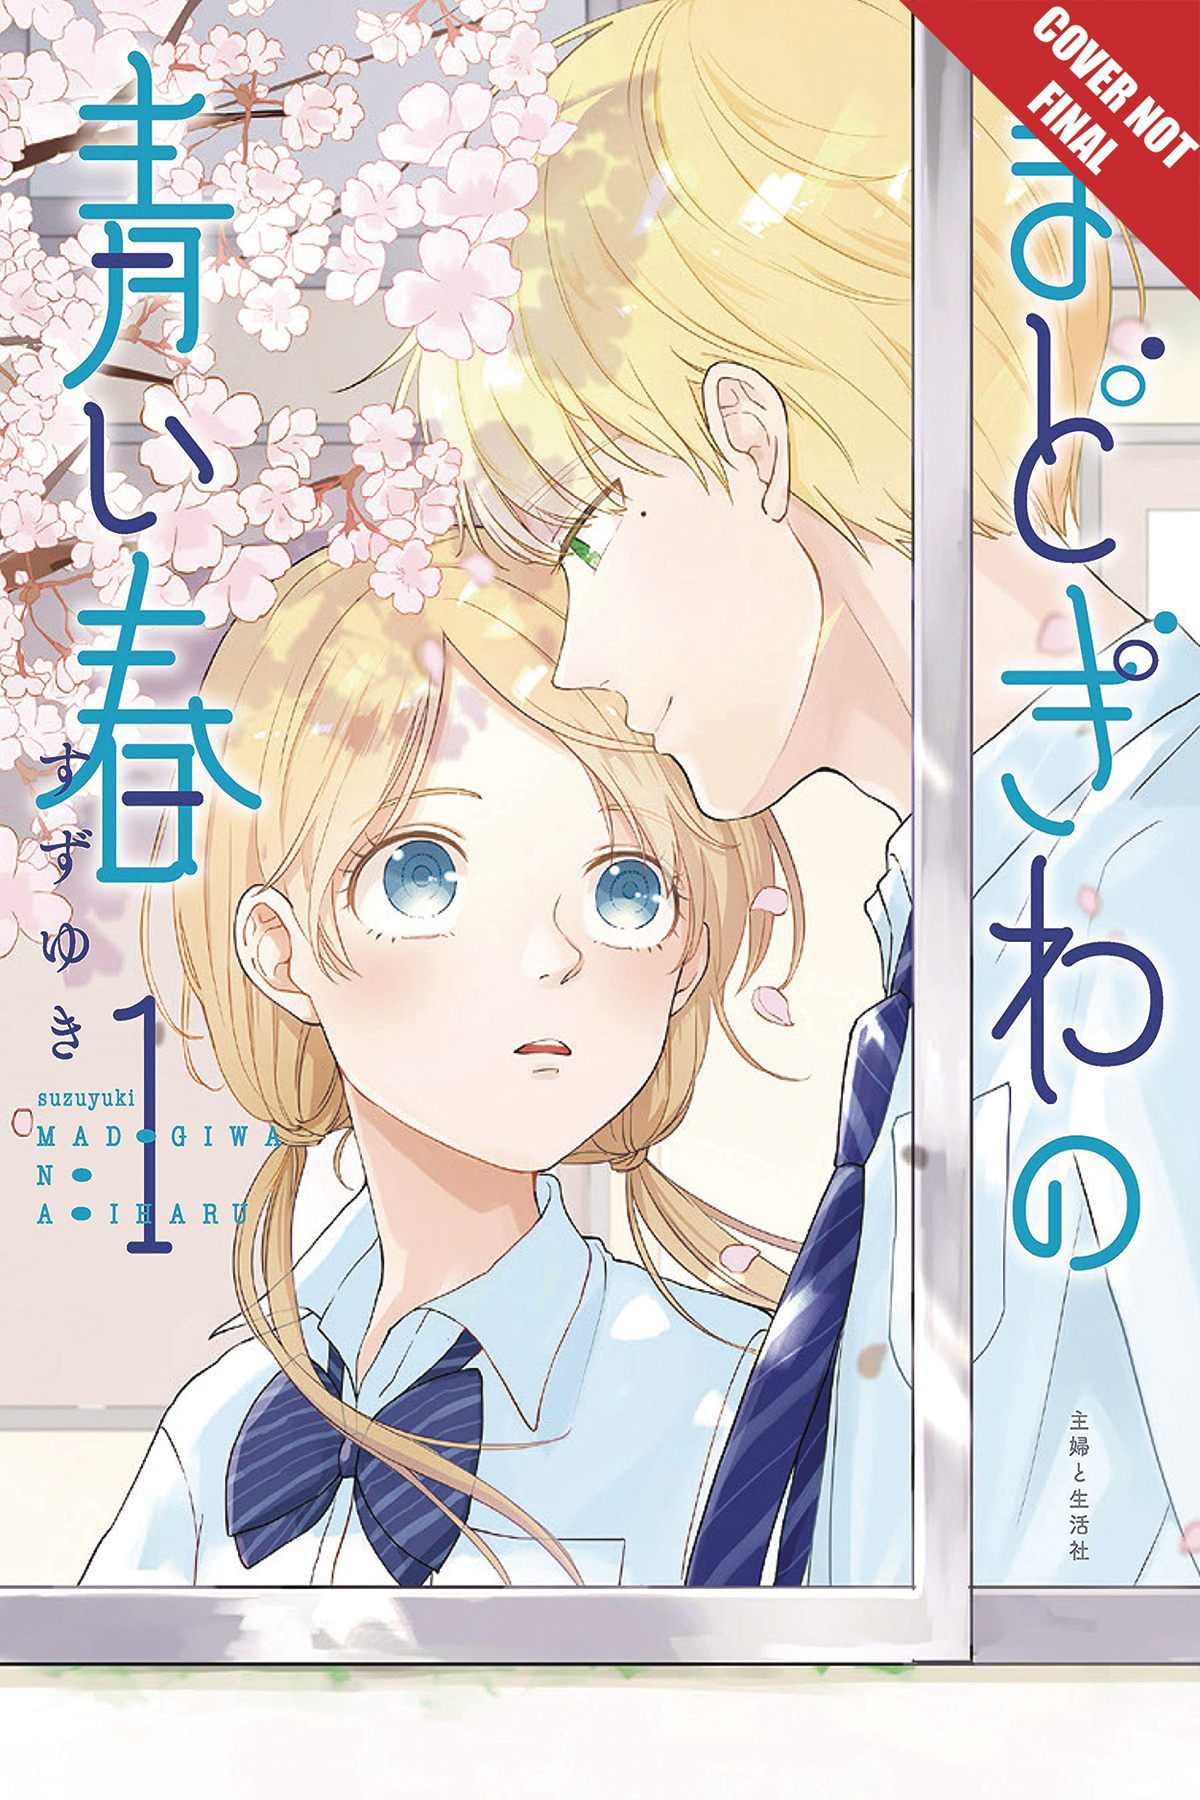 Springtime by Window Soft Cover Manga Volume 1